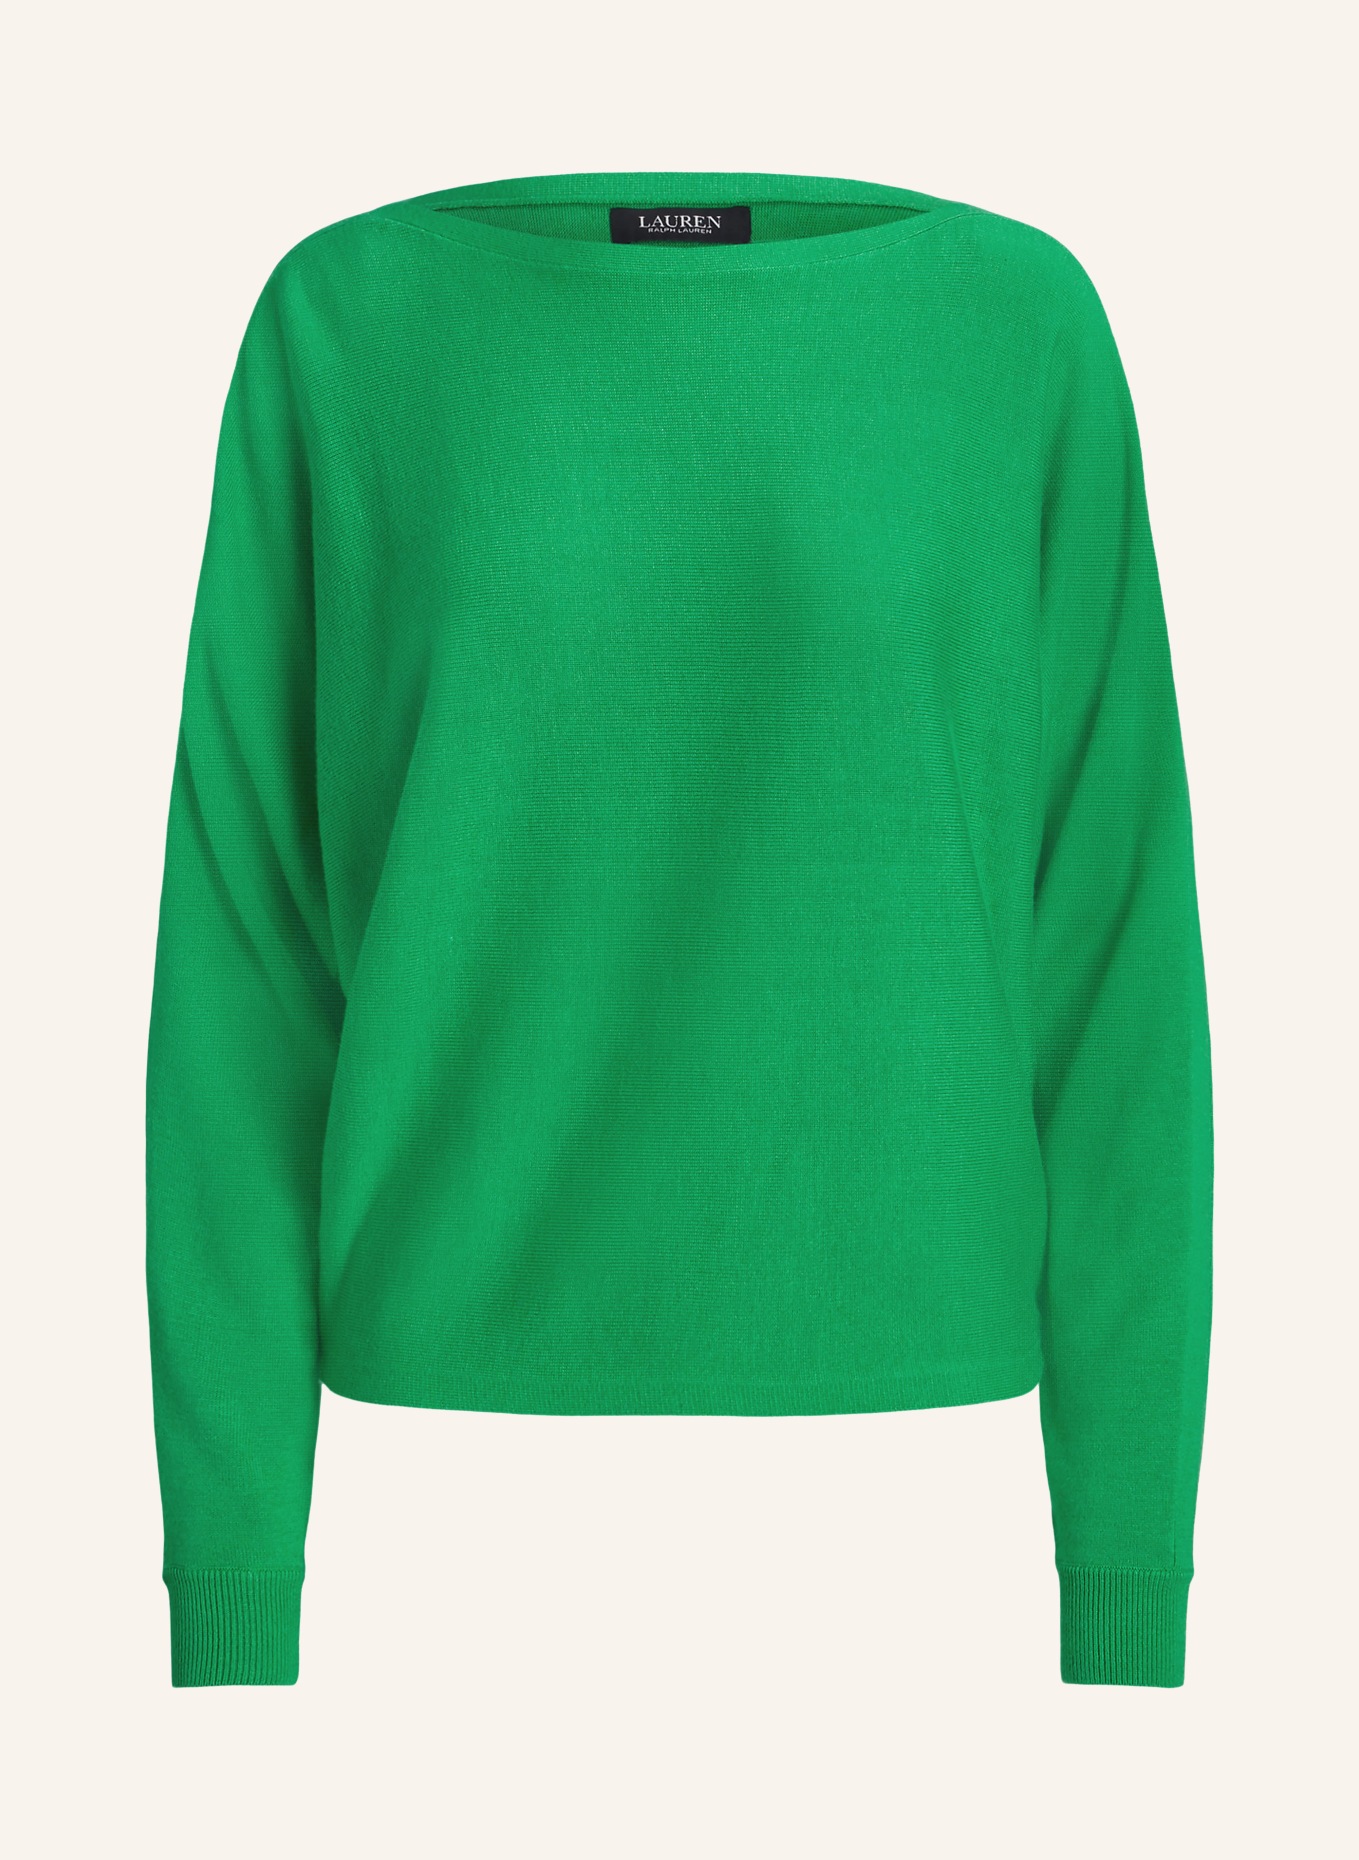 LAUREN RALPH LAUREN Pullover, Farbe: GRÜN (Bild 1)